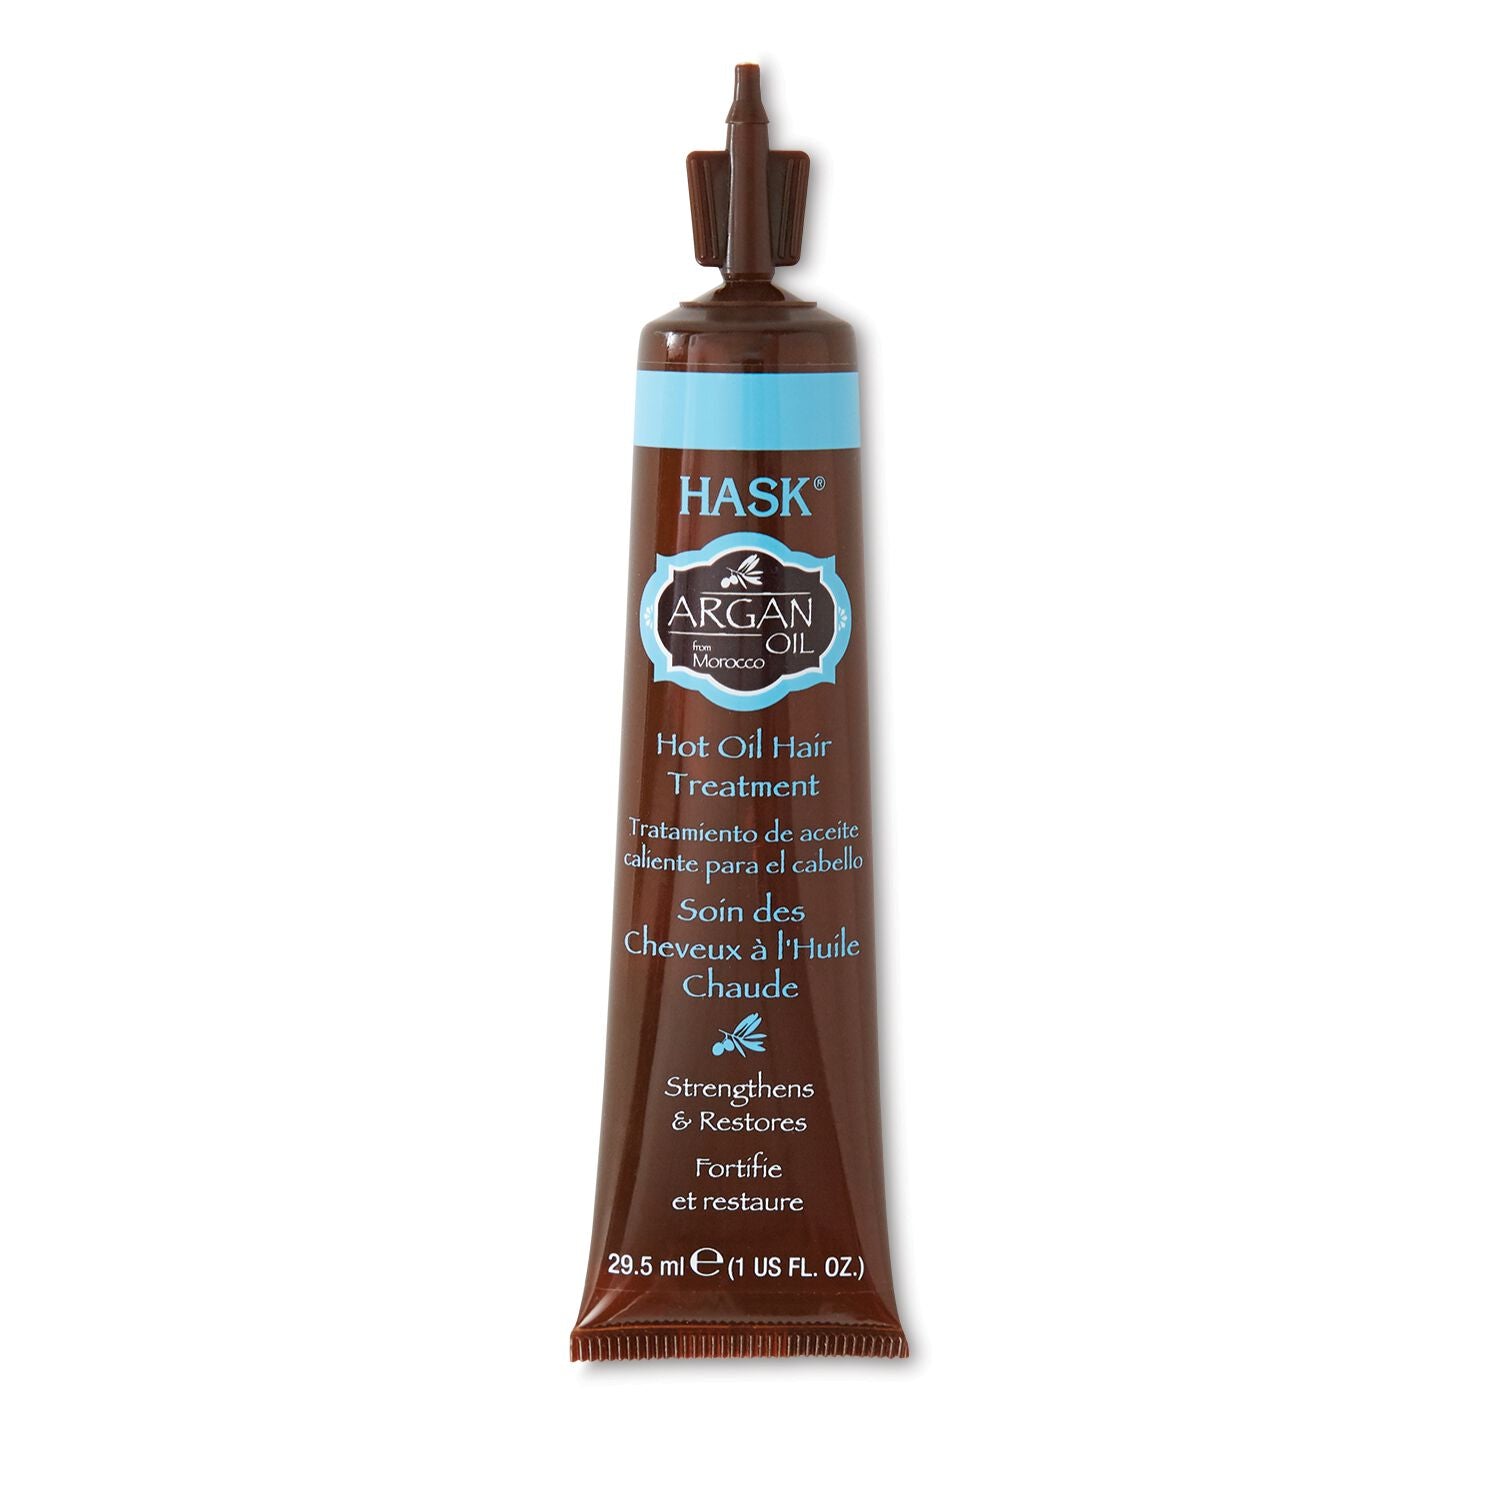 Hask Argan Oil From Morocco Hot Oil Hair Treatment